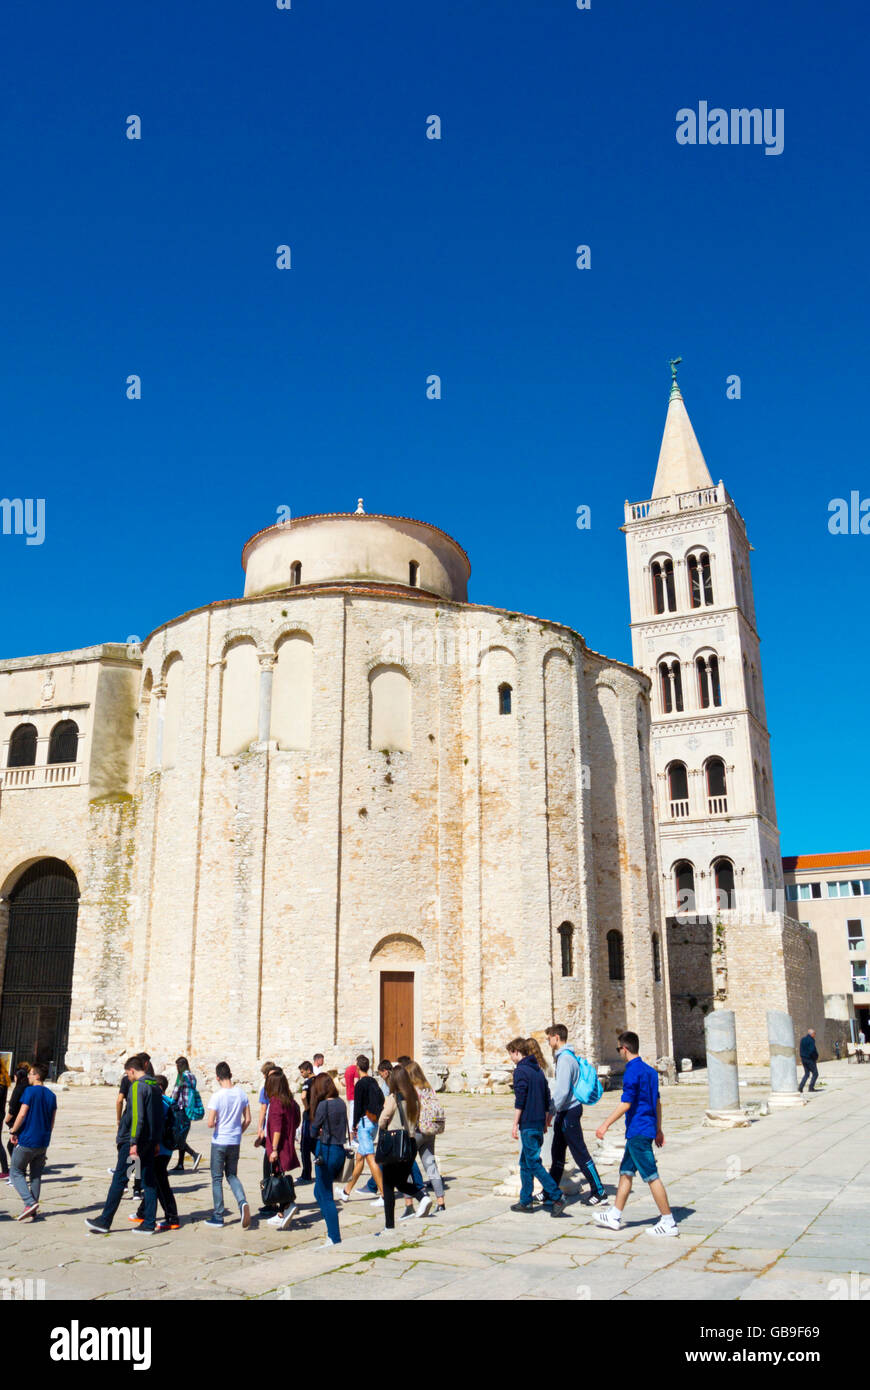 Guided tour group, at Crkva sv. Donata, St Donatus church, Forum, Zadar, Dalmatia, Croatia Stock Photo